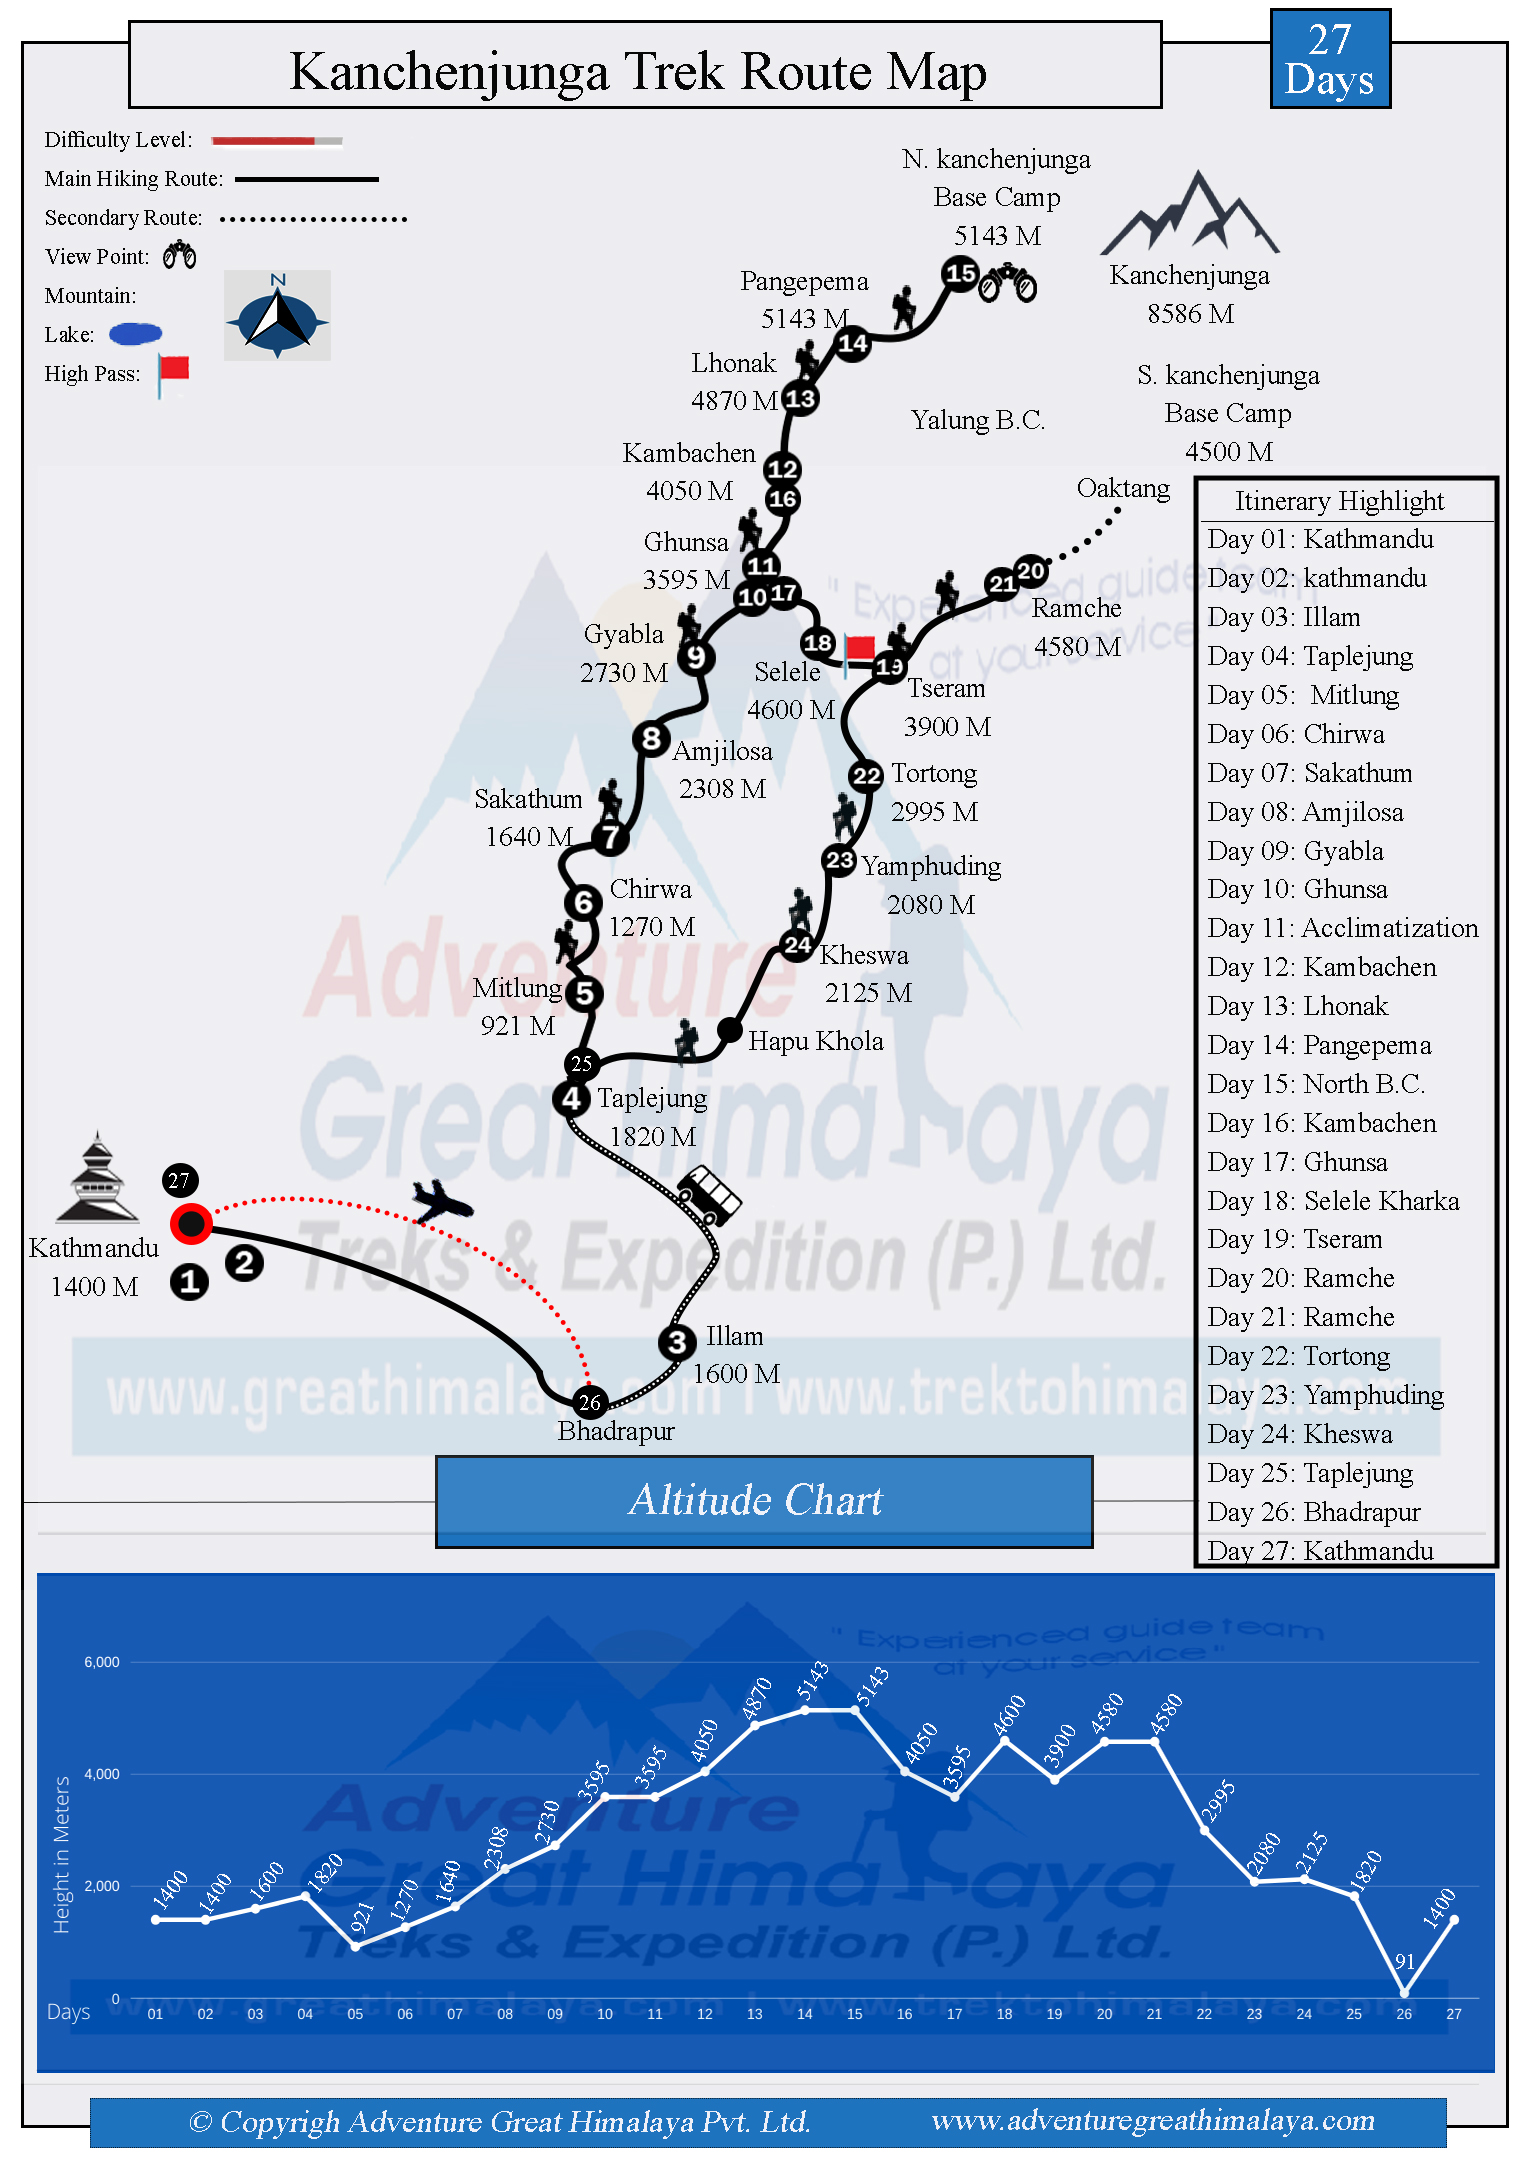 Kanchenjunga Trek Route Map